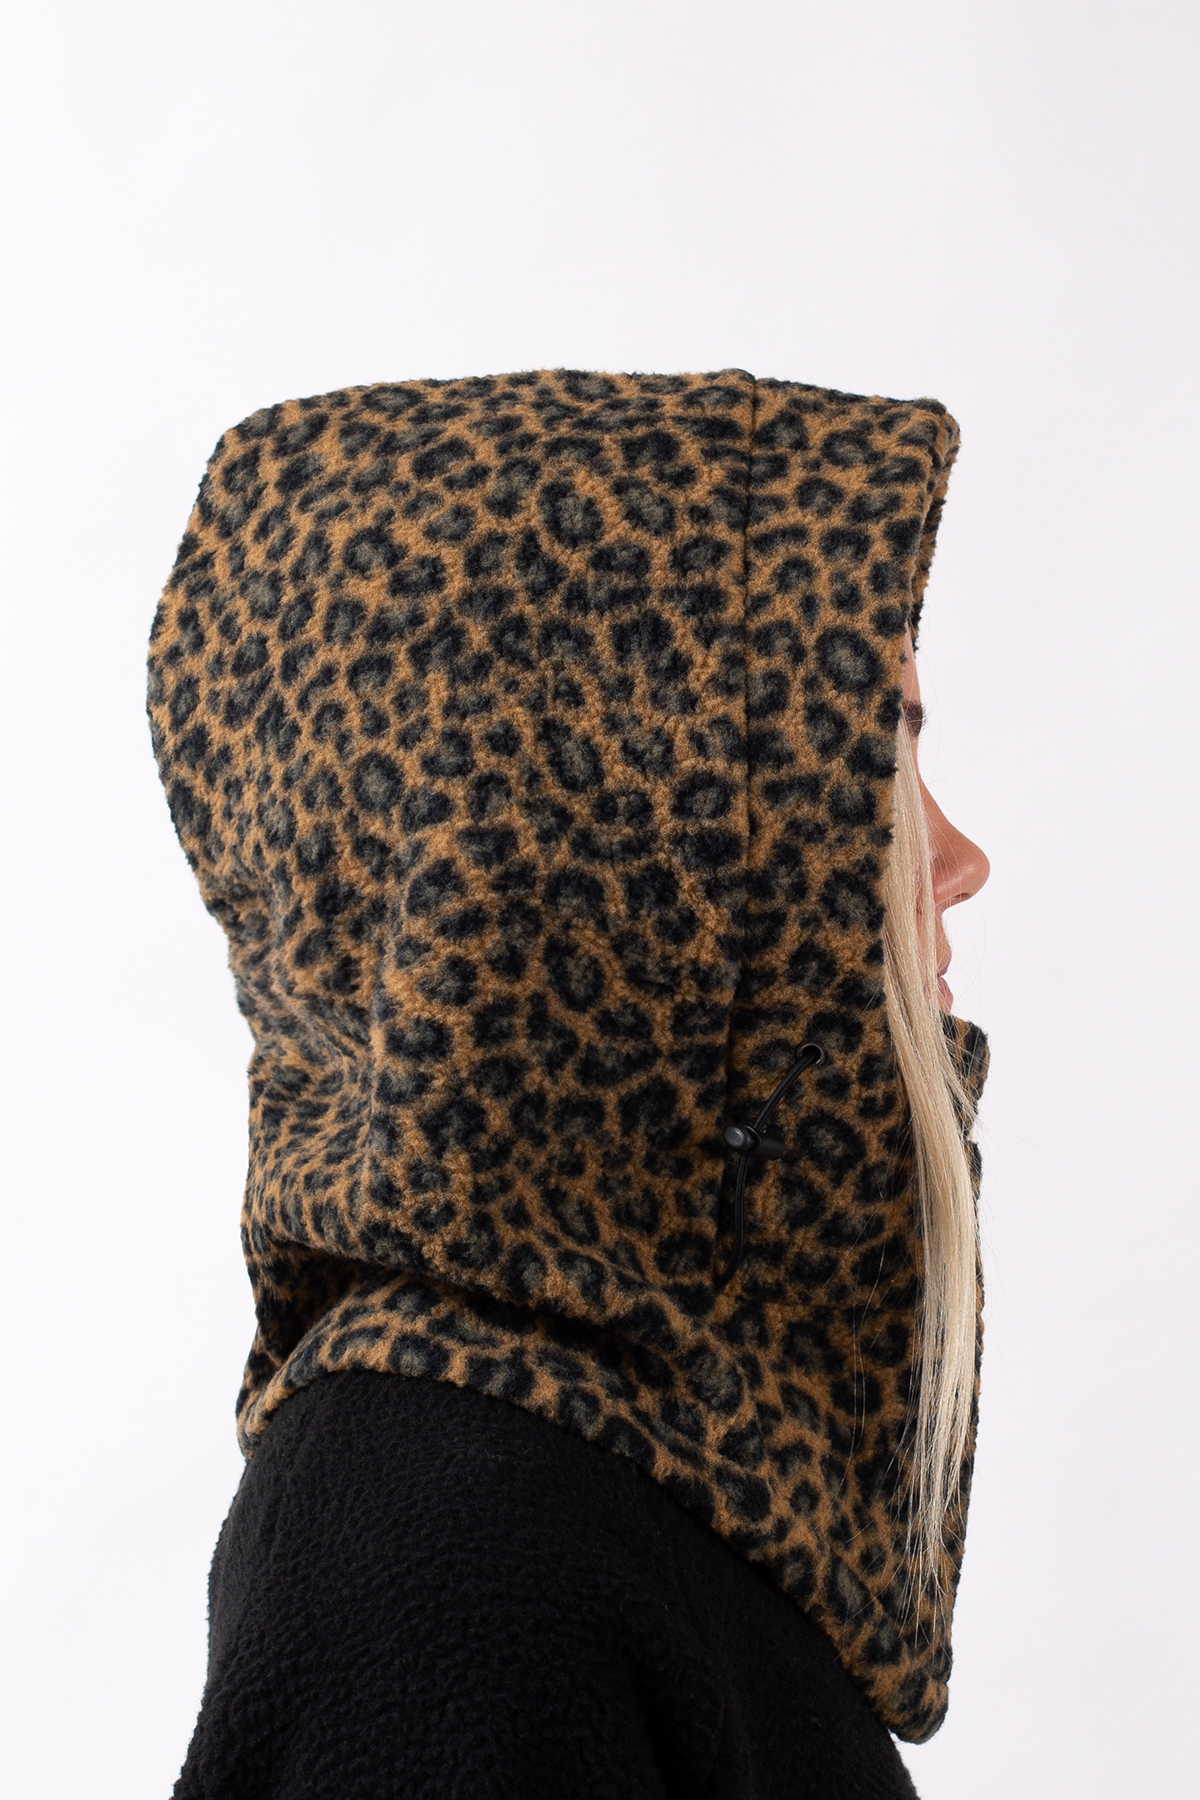 Mandy Fleece Balaclava leopard